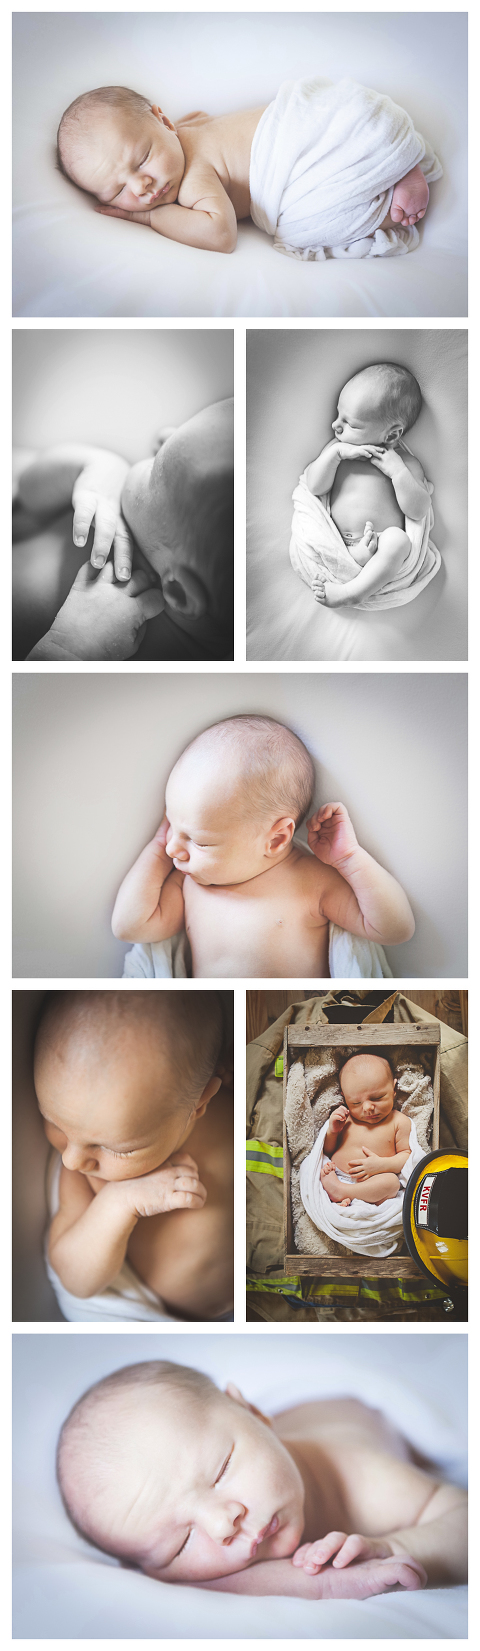 Baby Curtis-lifestyle newborn photography by Hailey Haberman in Ellensburg WA